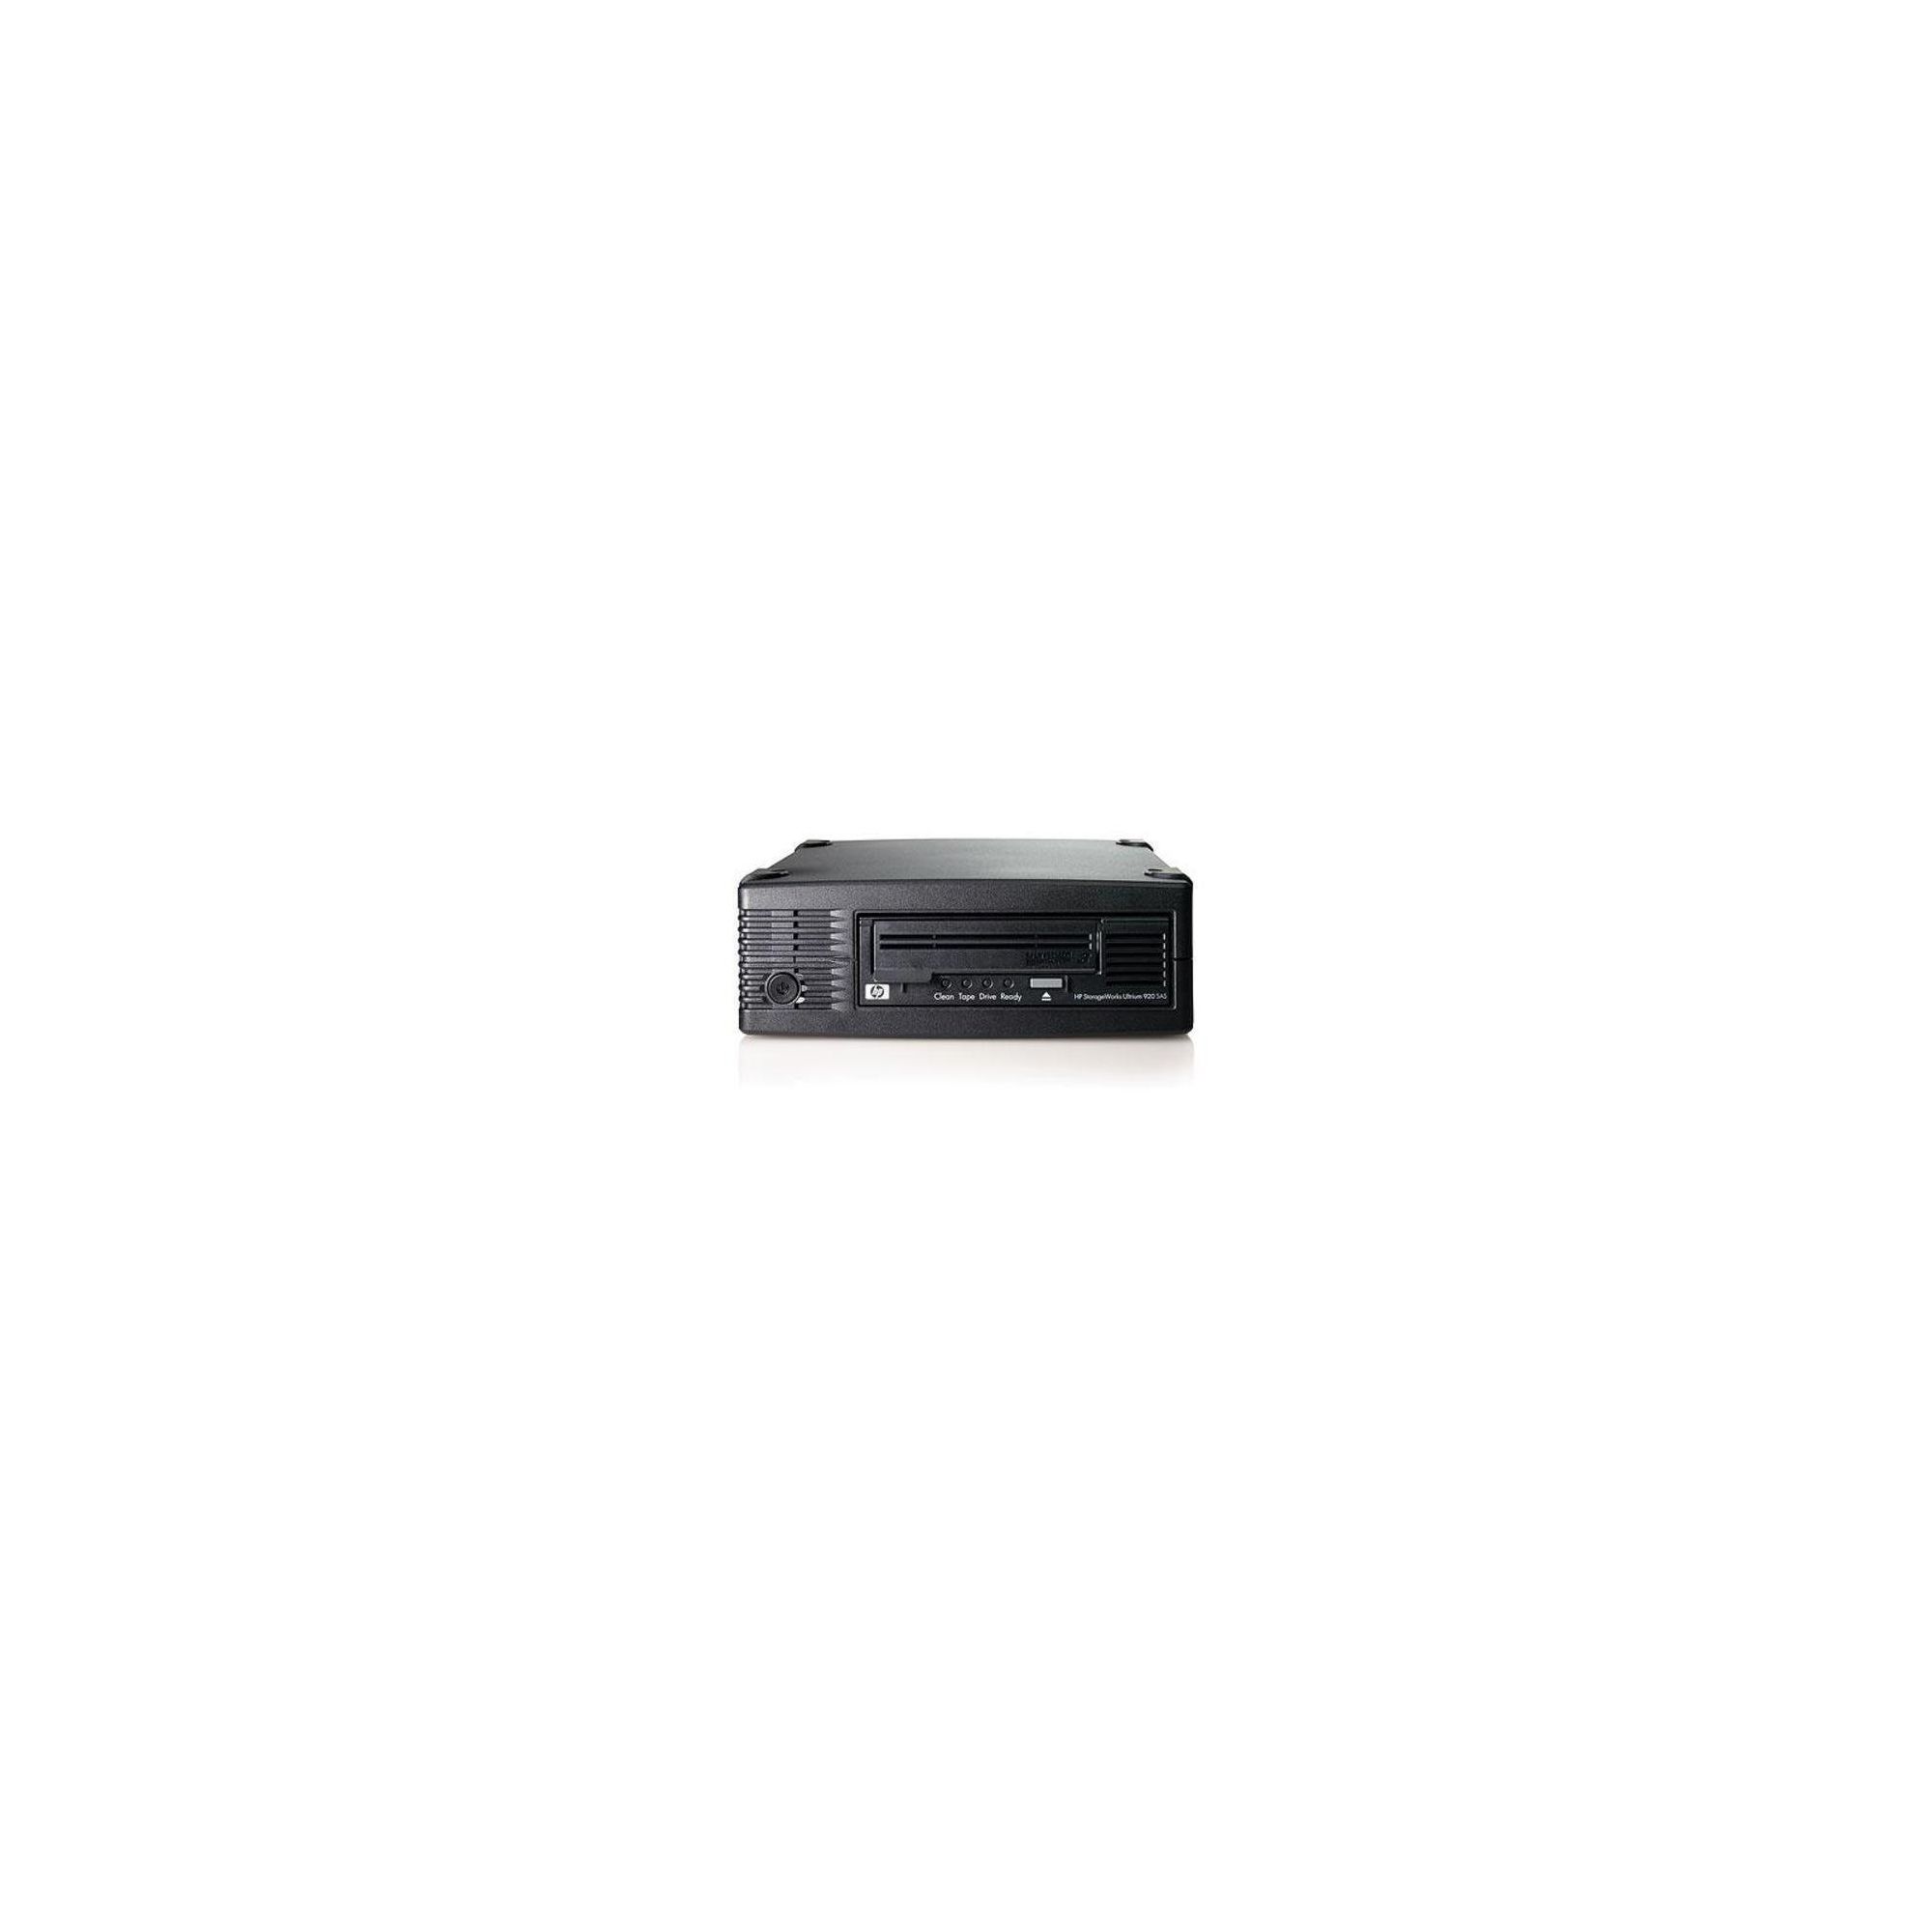 Hewlett-Packard StorageWorks Ultrium 920 SAS Internal Tape Drive/Top Value at Tesco Direct